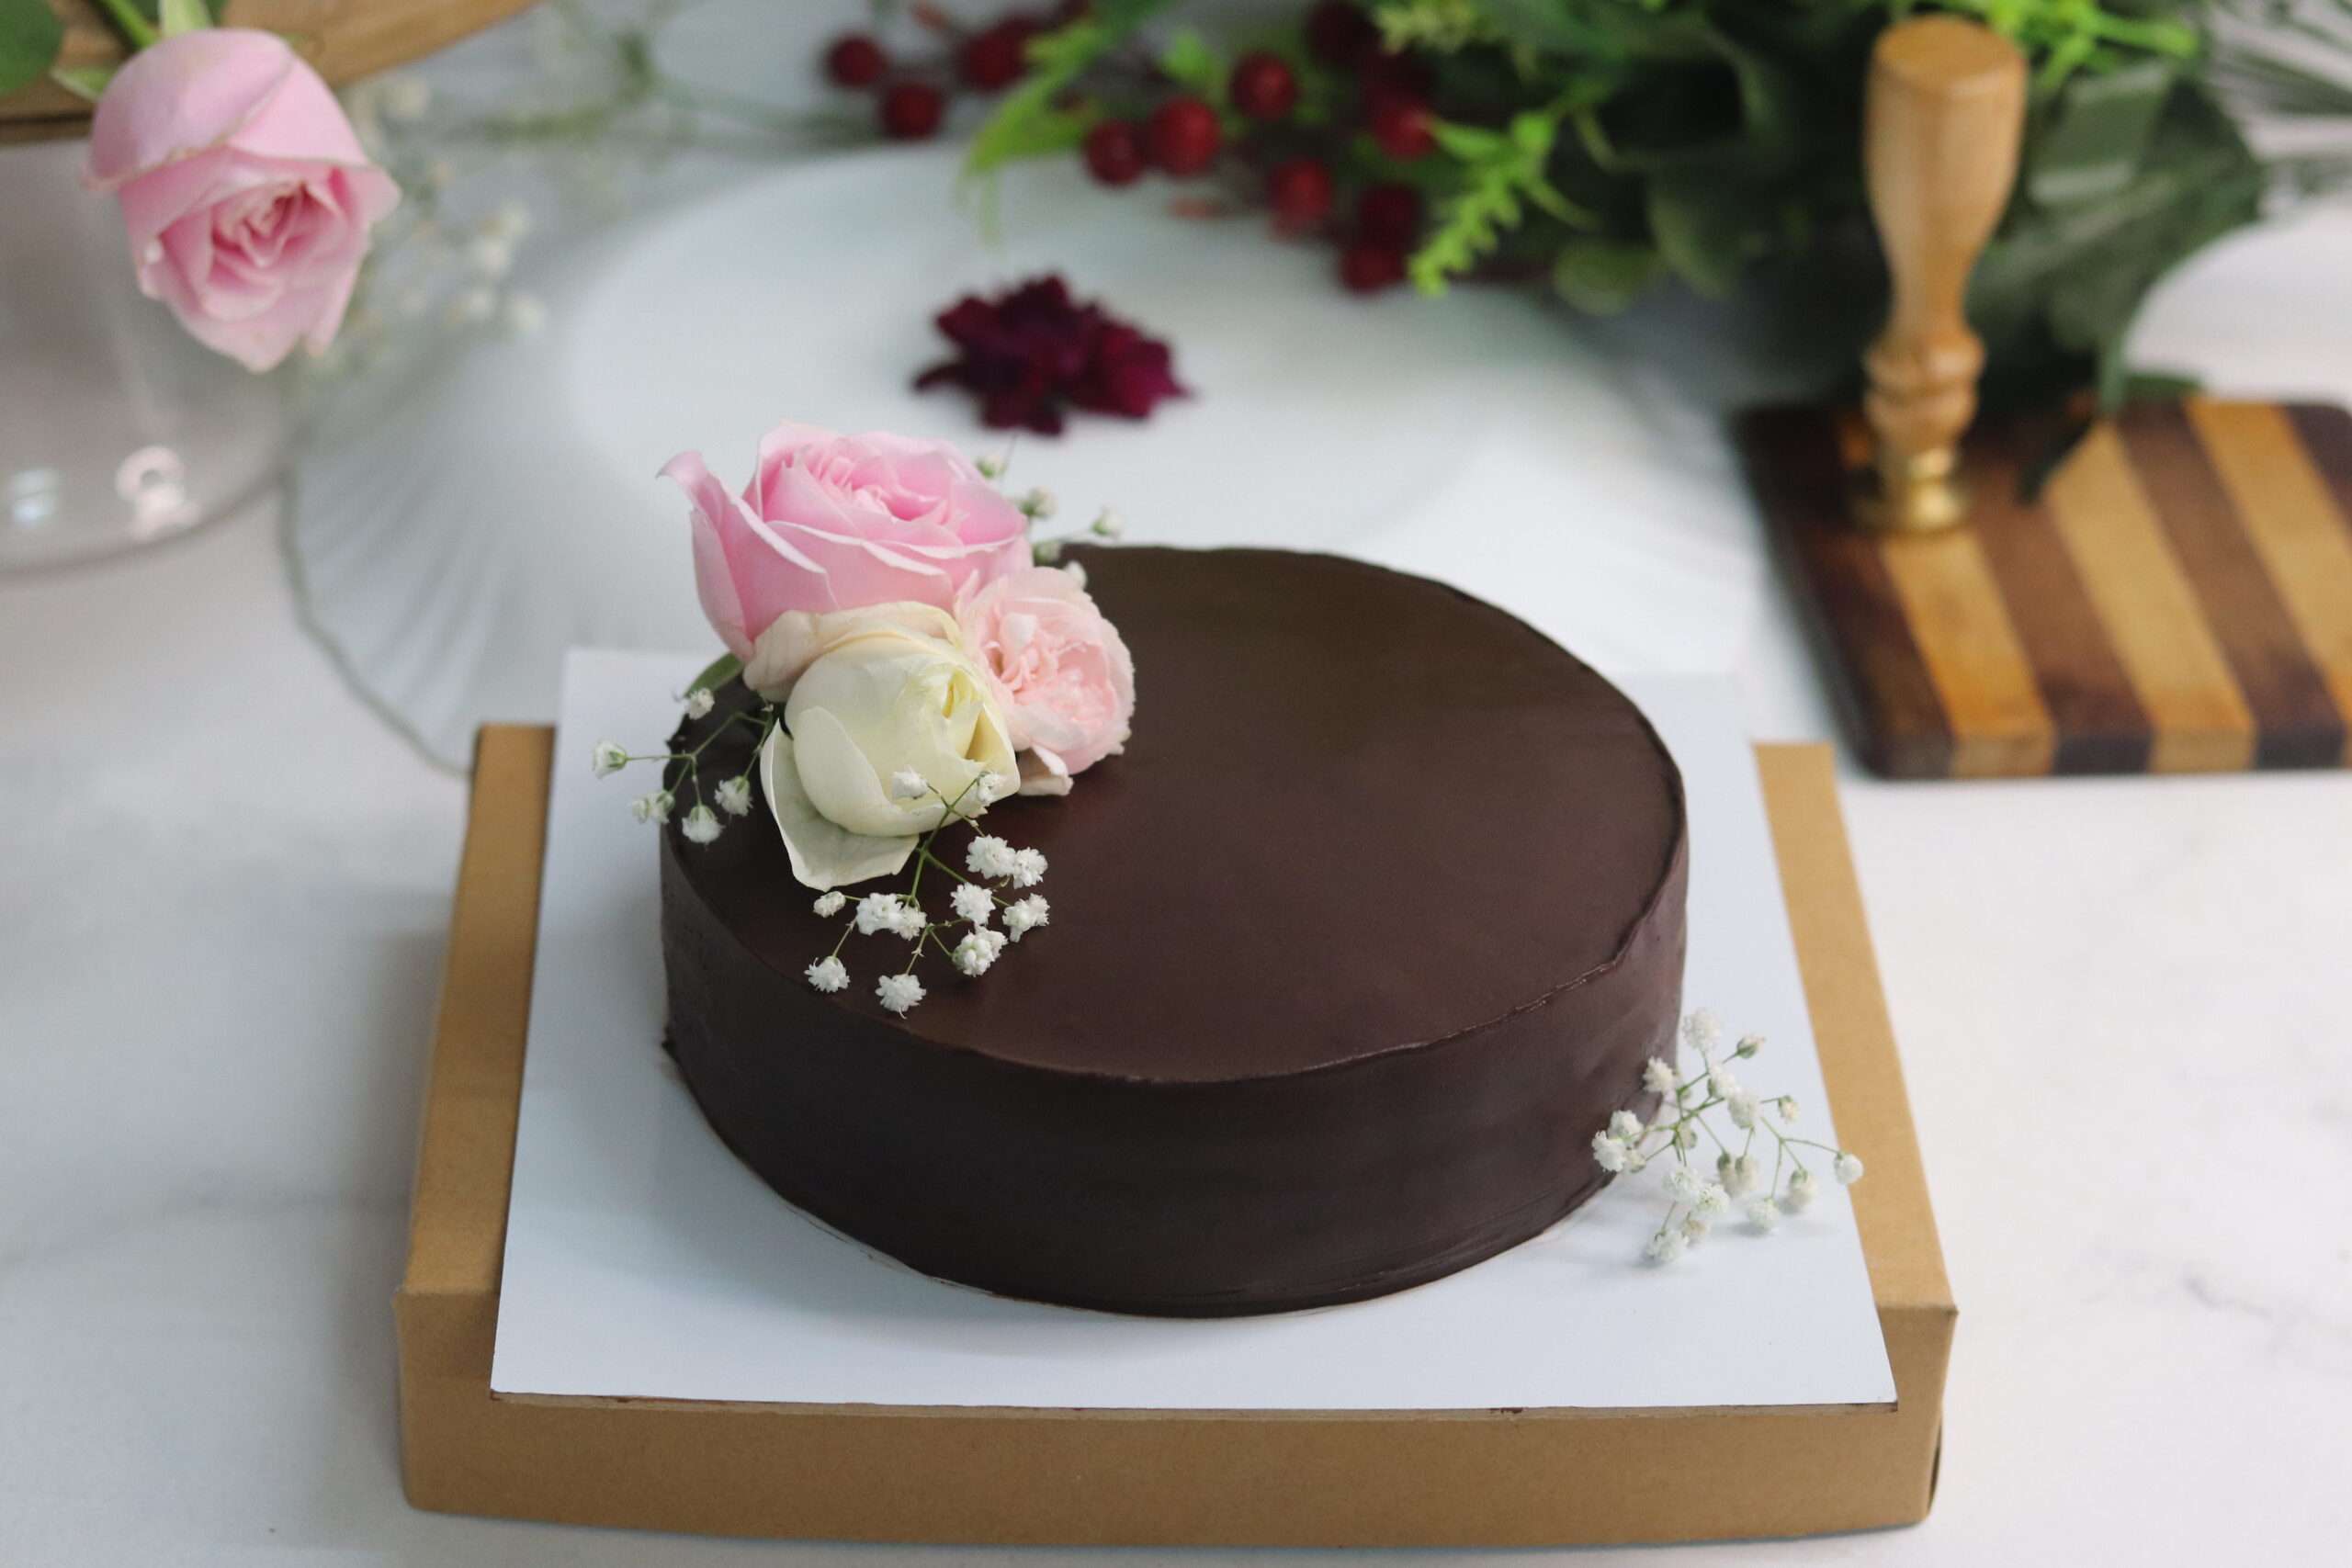 VALENTINE CHOCOLATE ROSE CAKE - Asansol Cake Delivery Shop